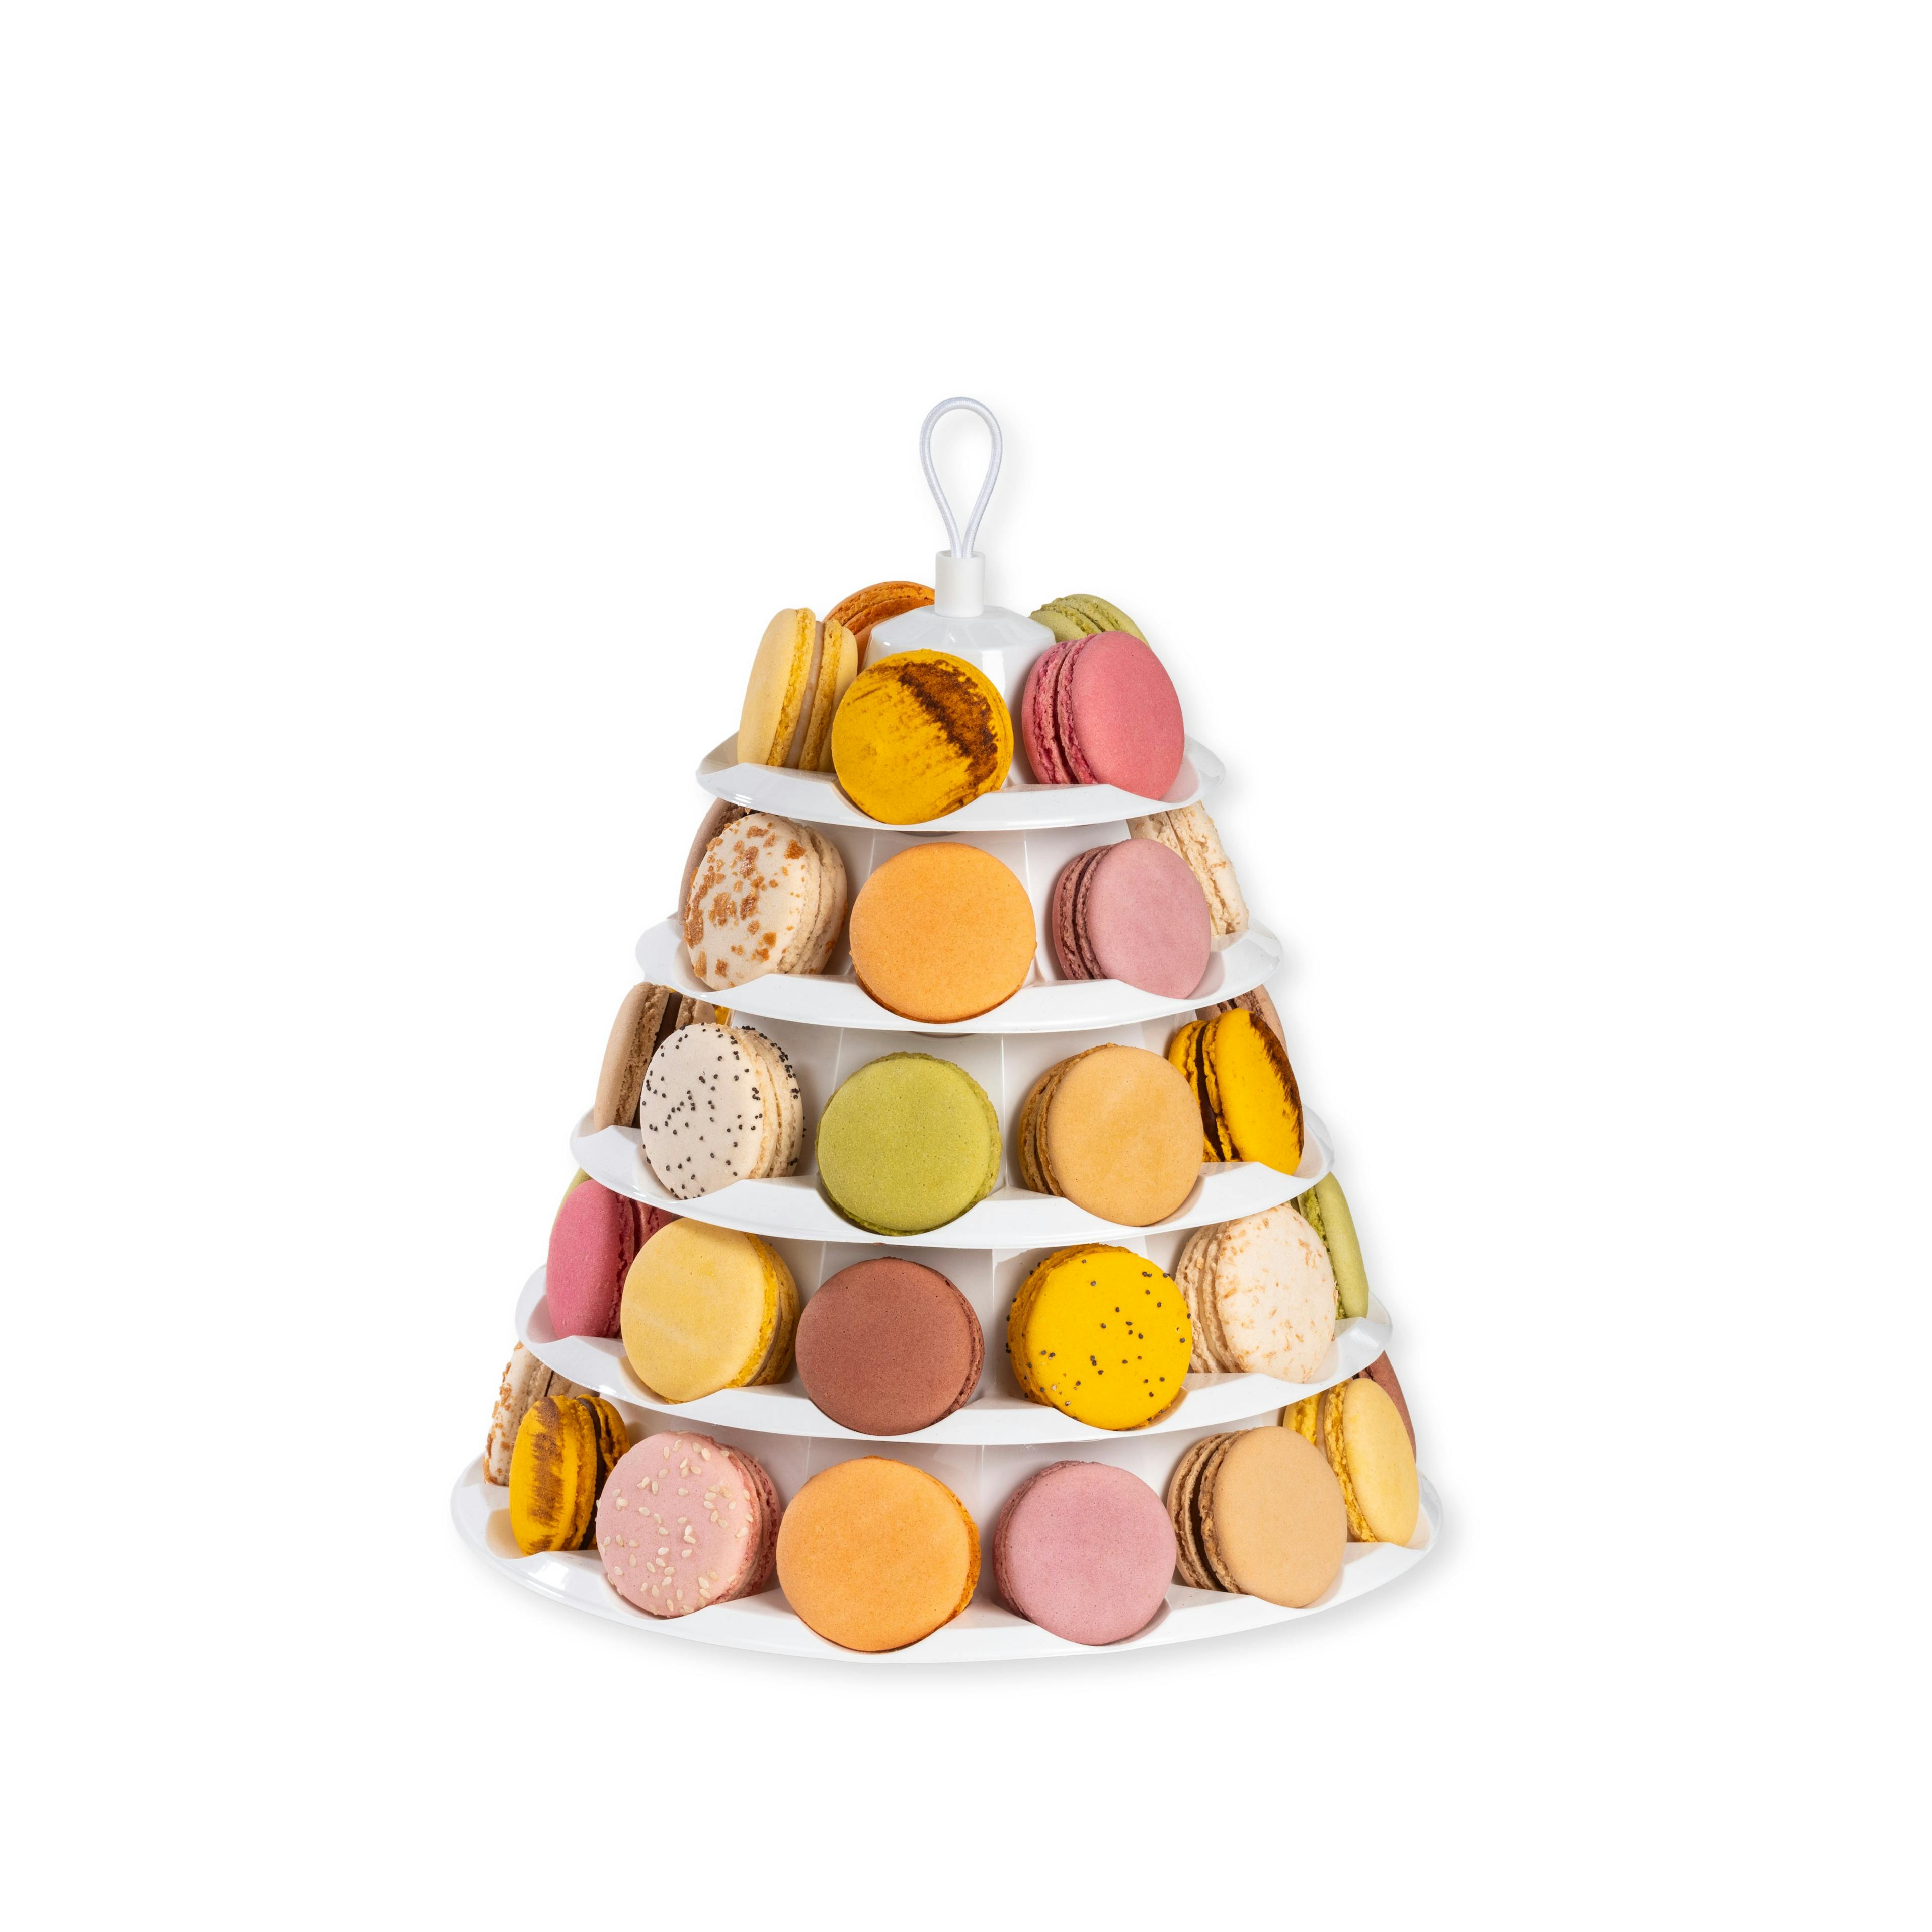 Pyramide 45 macarons - Vincent Vallée chocolatier champion du monde